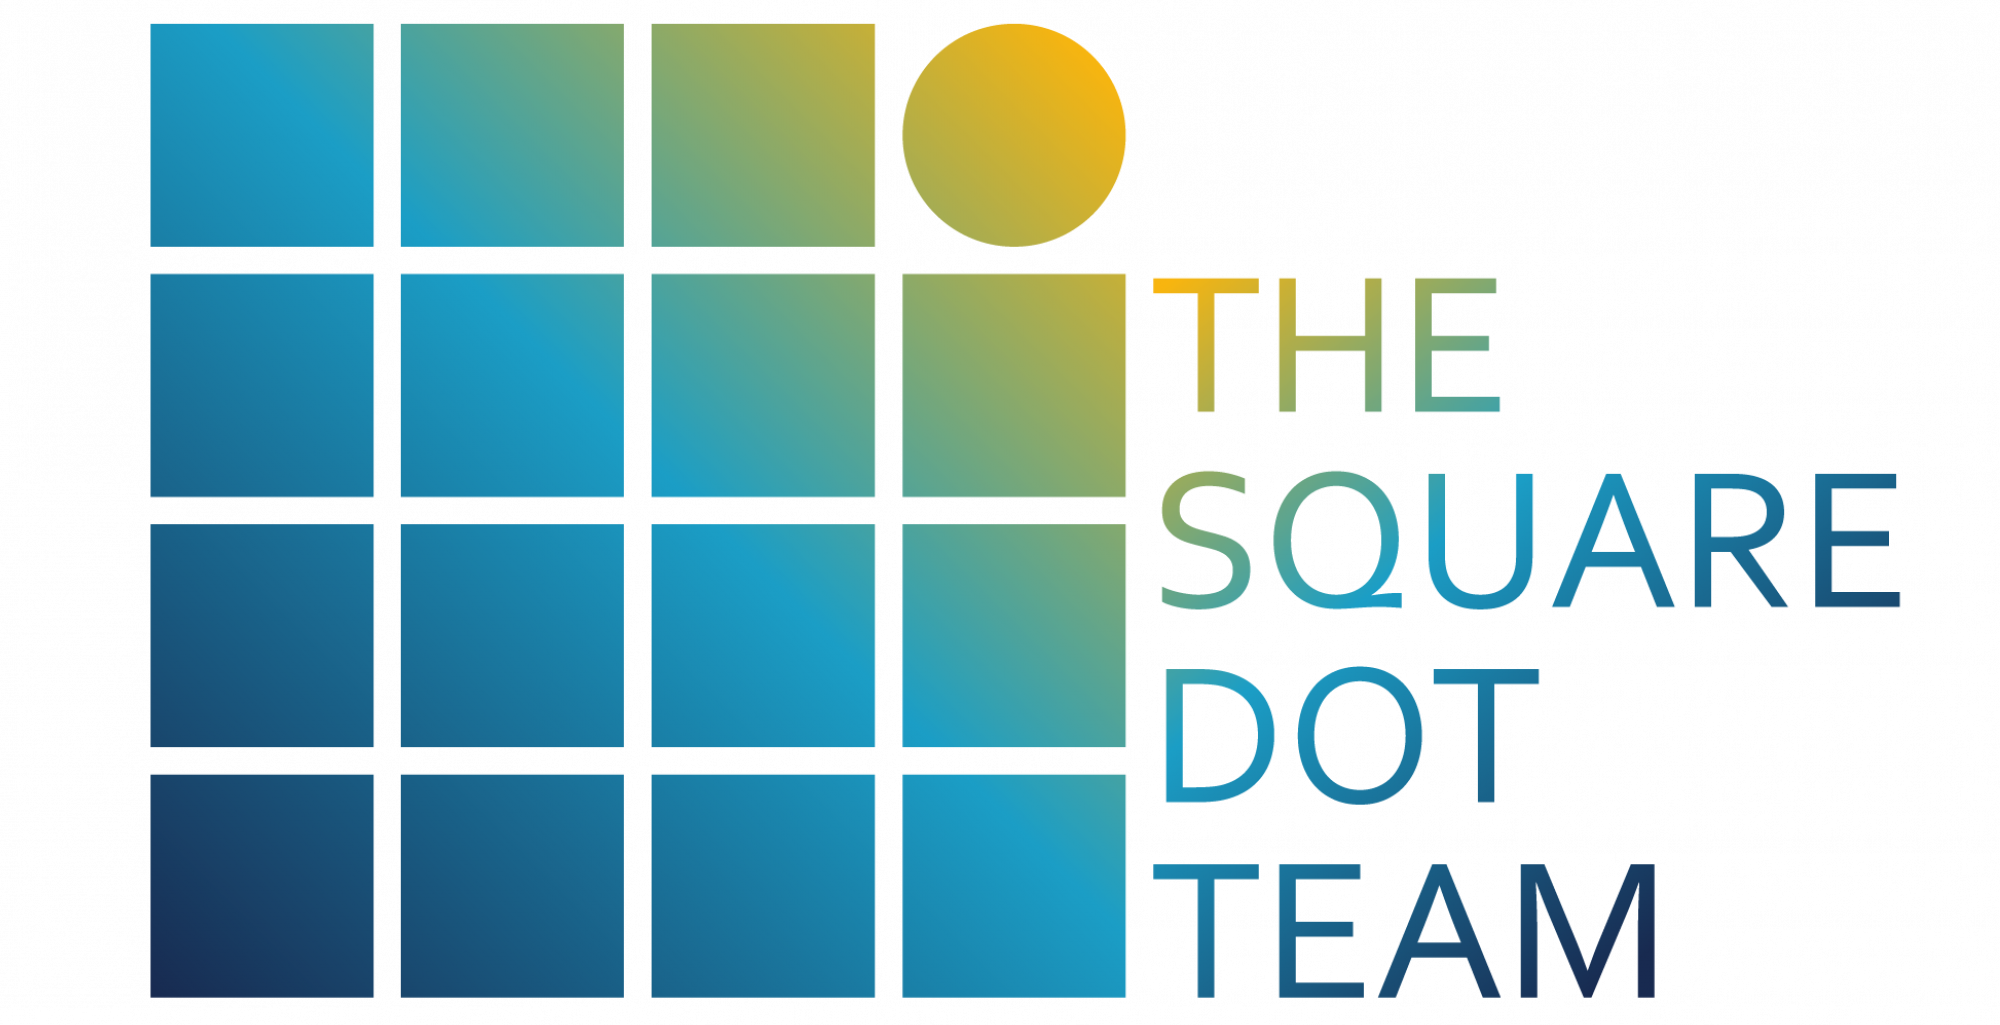 The Square Dot team